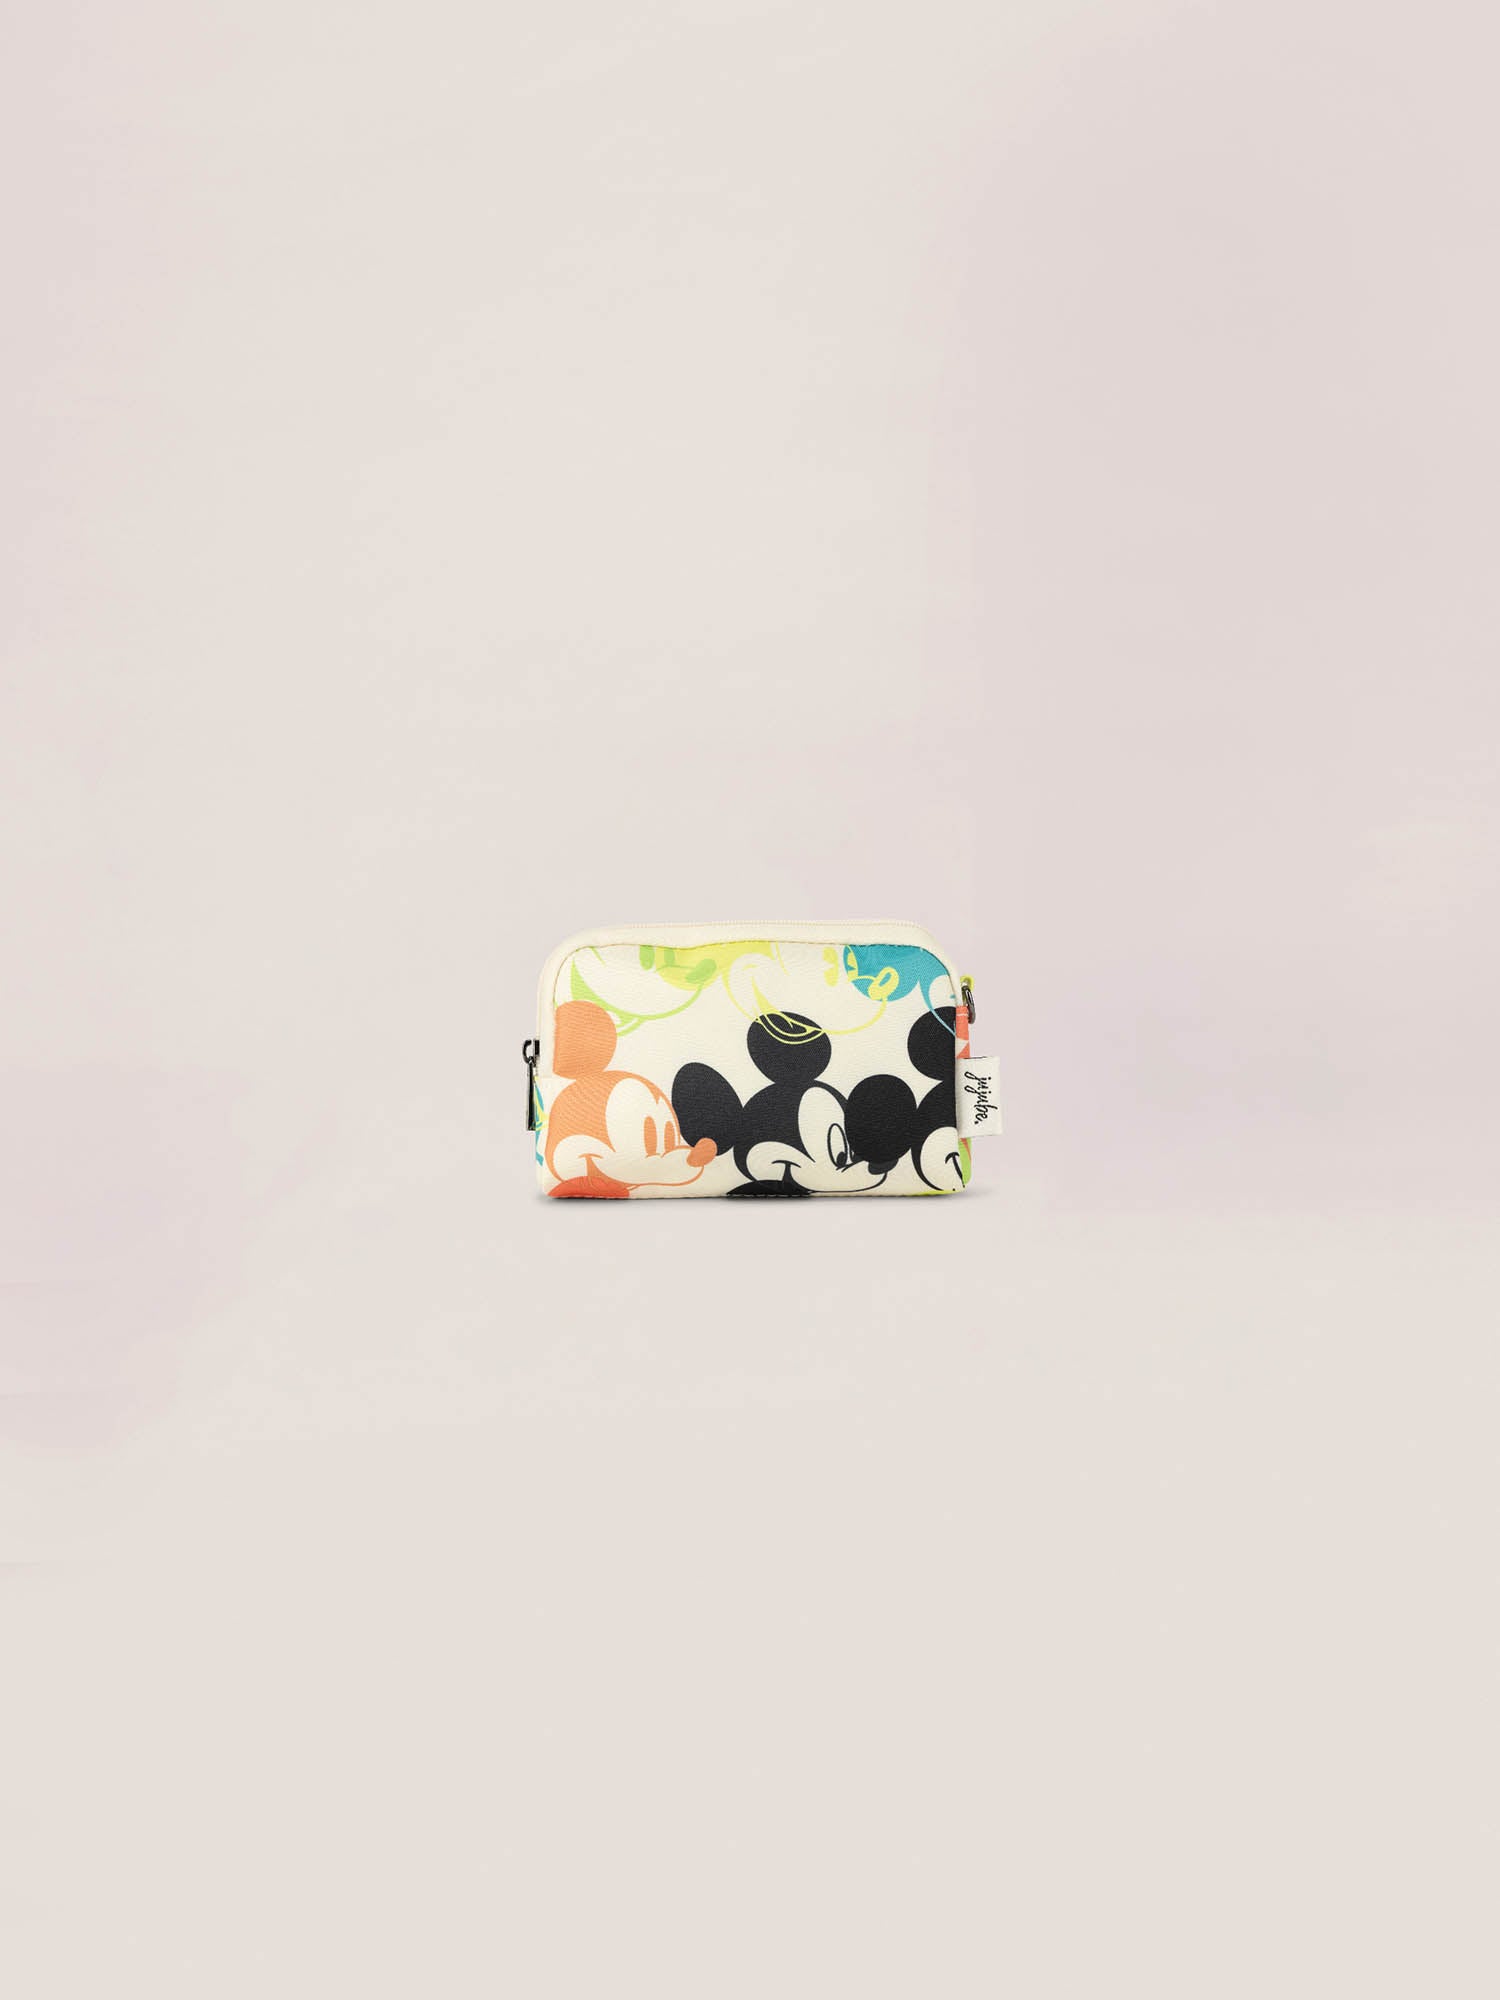 Zealous Backpack Pop Art Mickey Mouse